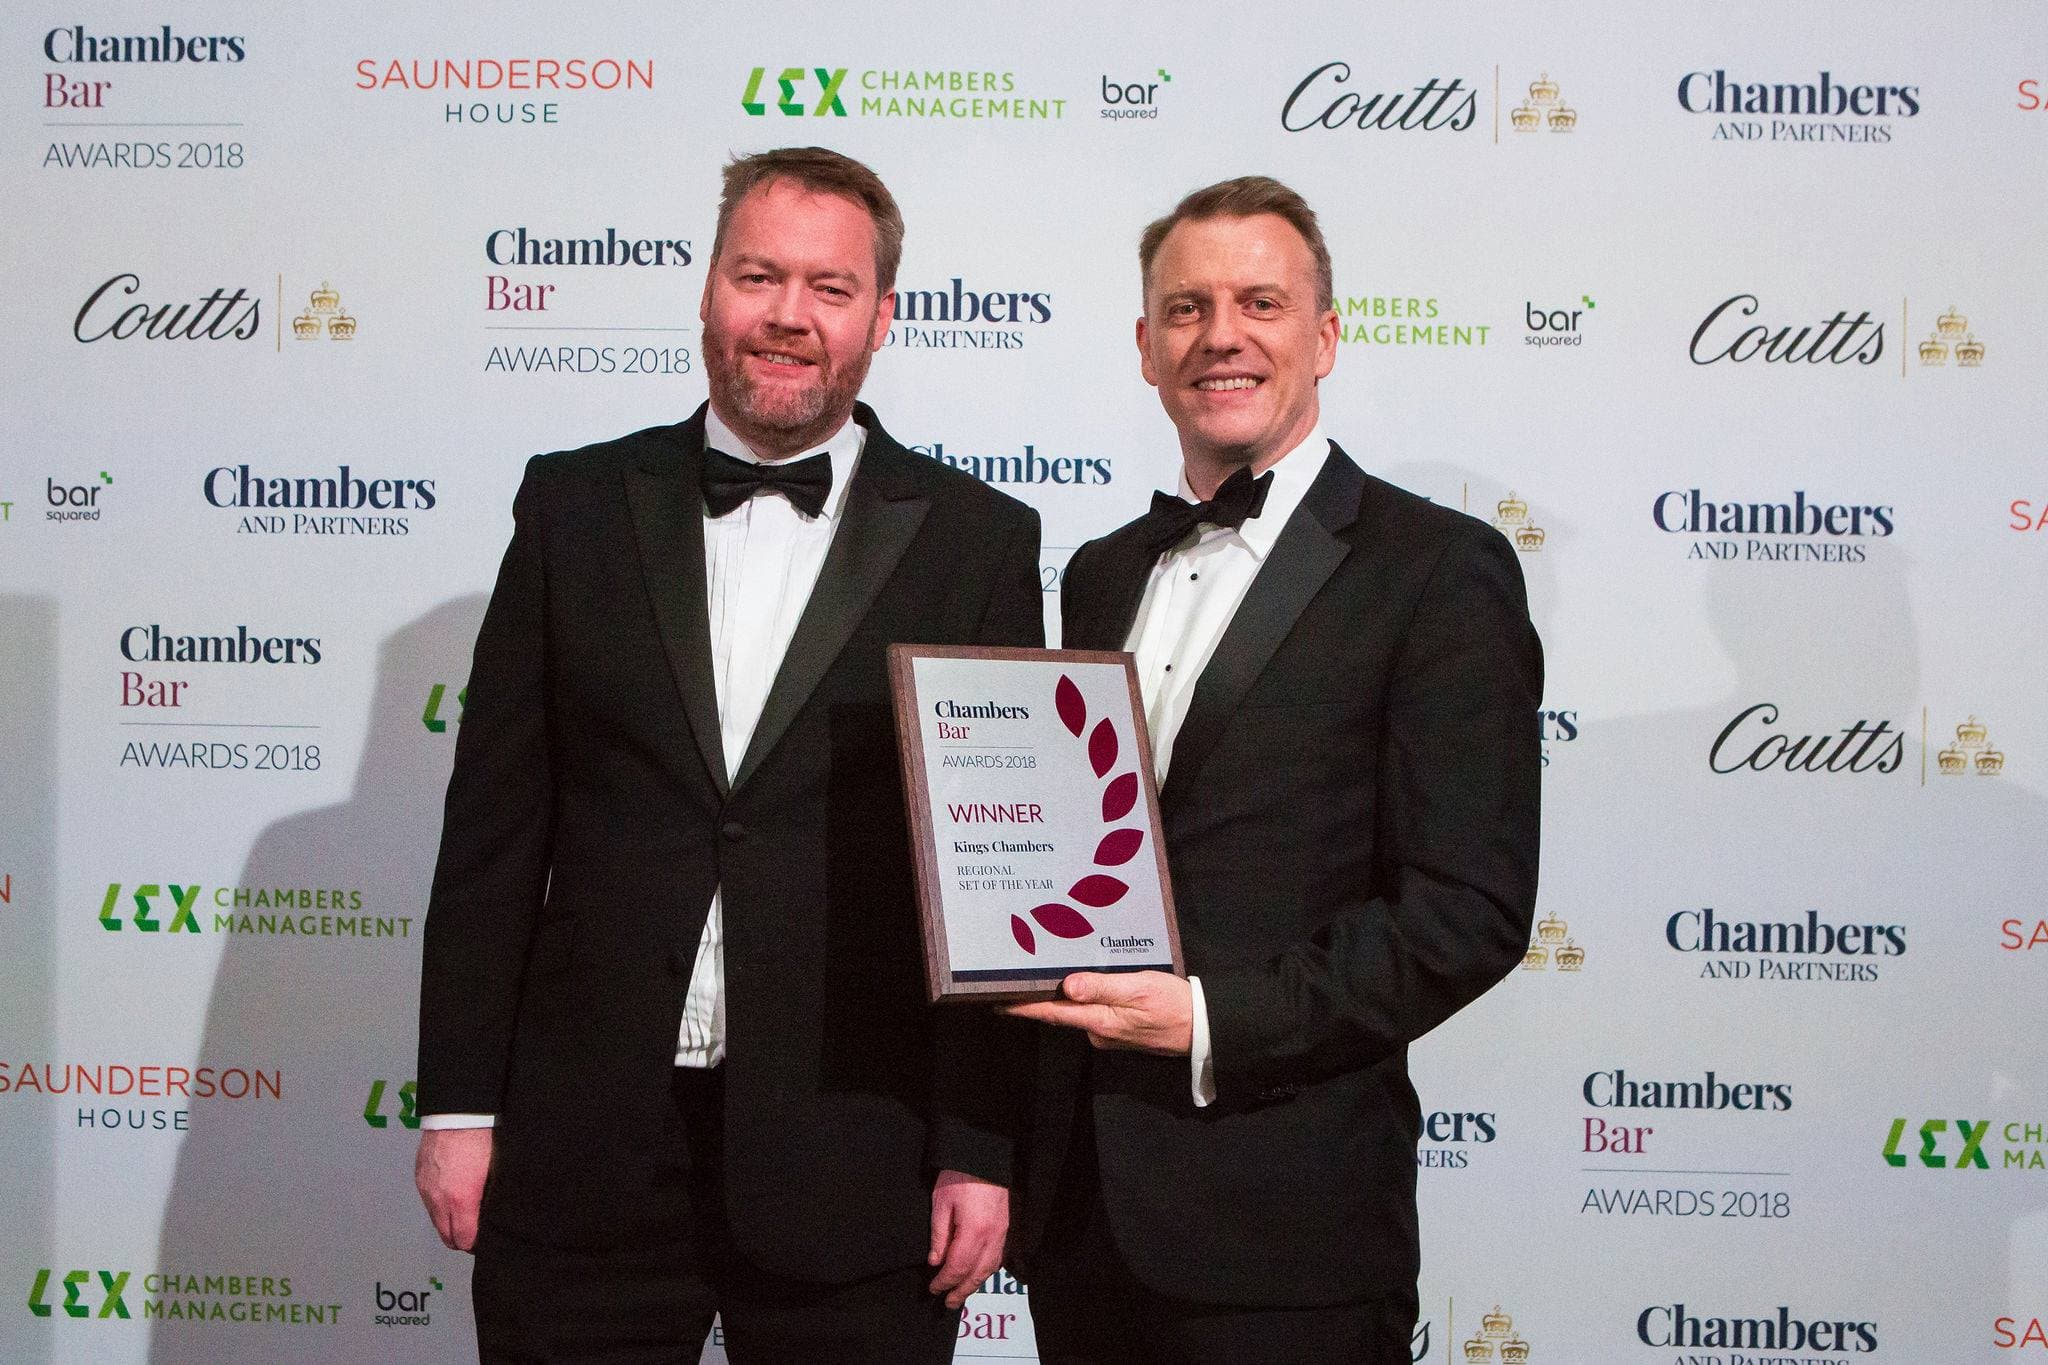 Kings Chambers secures prestigious win at Chambers Bar Awards